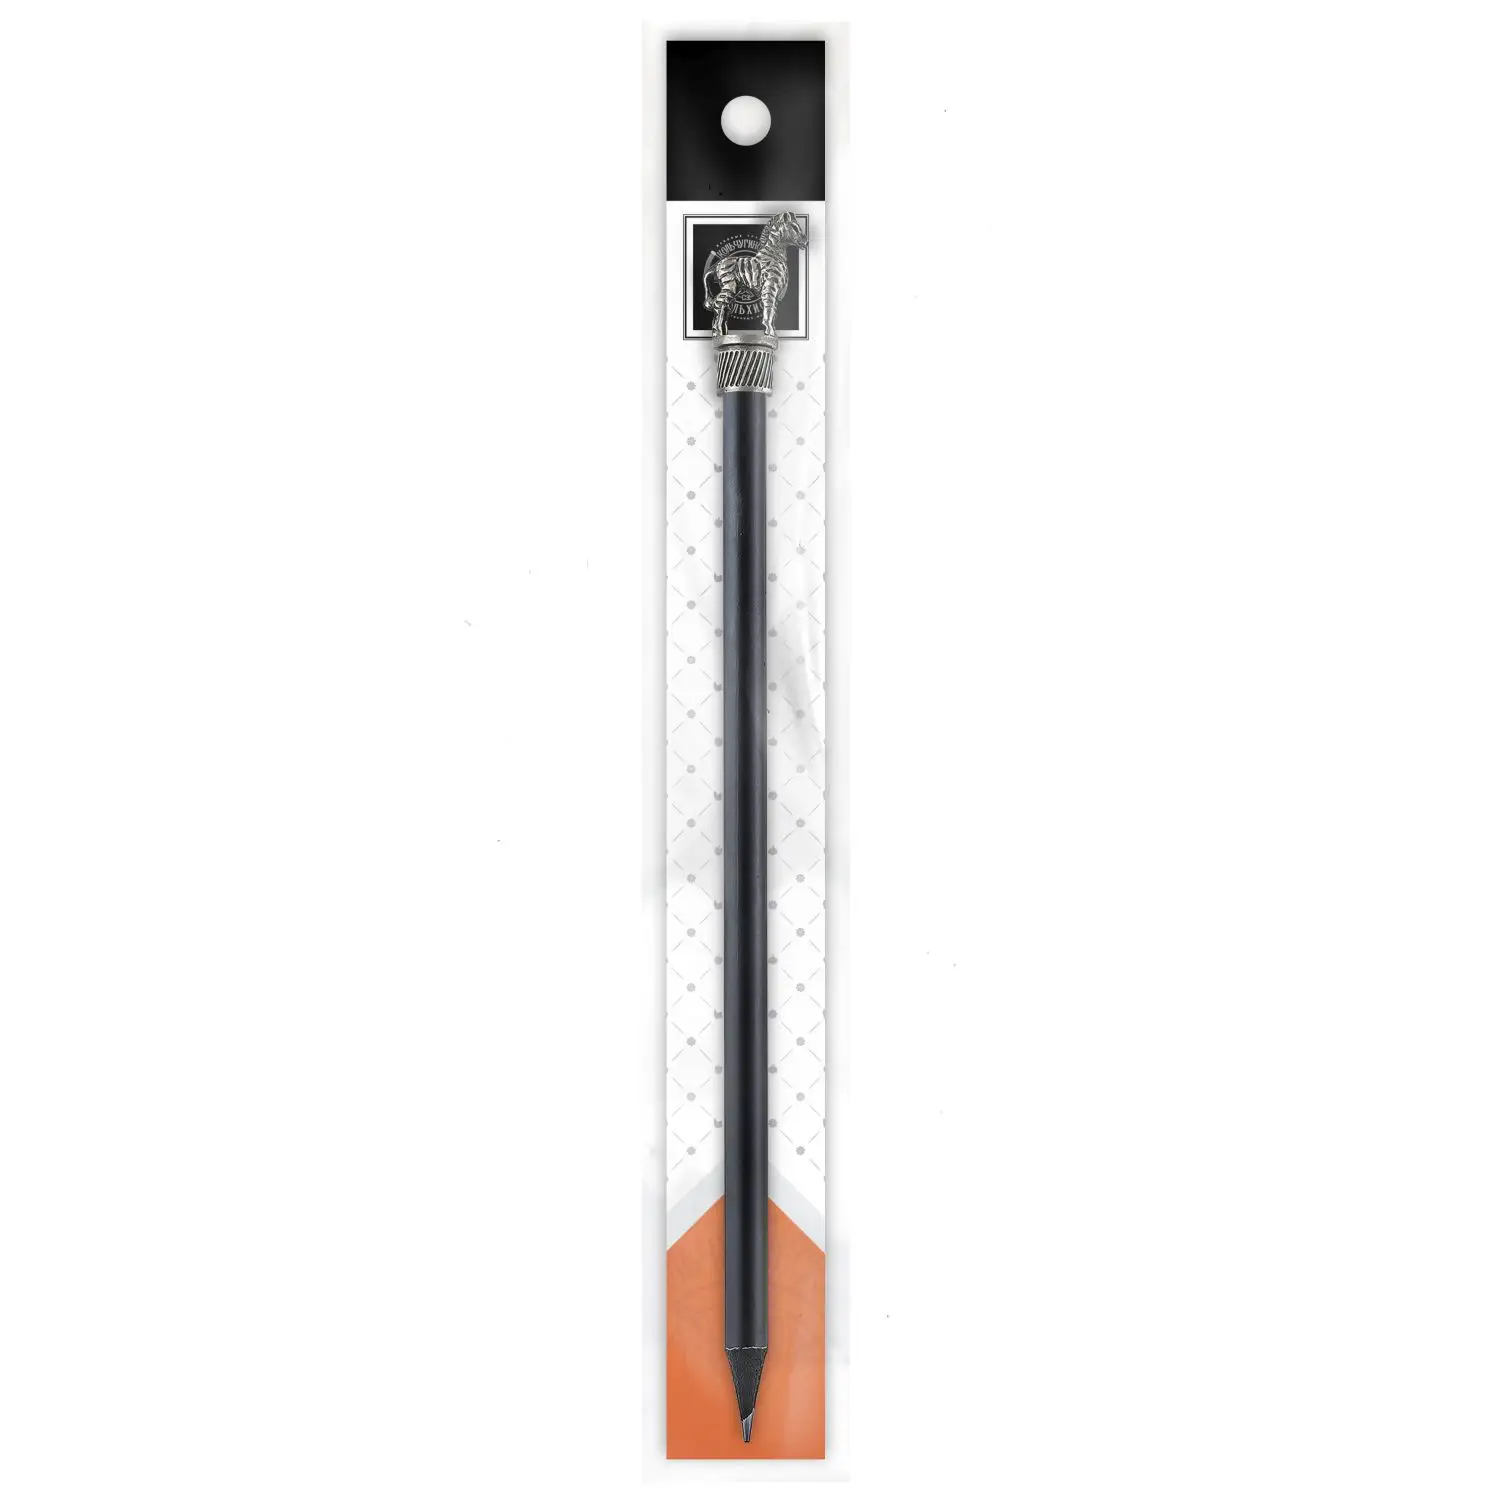 Карандаш Сафари-Зебра латунный посеребренный с чернением карандаш георгий победоносец латунный посеребренный с чернением